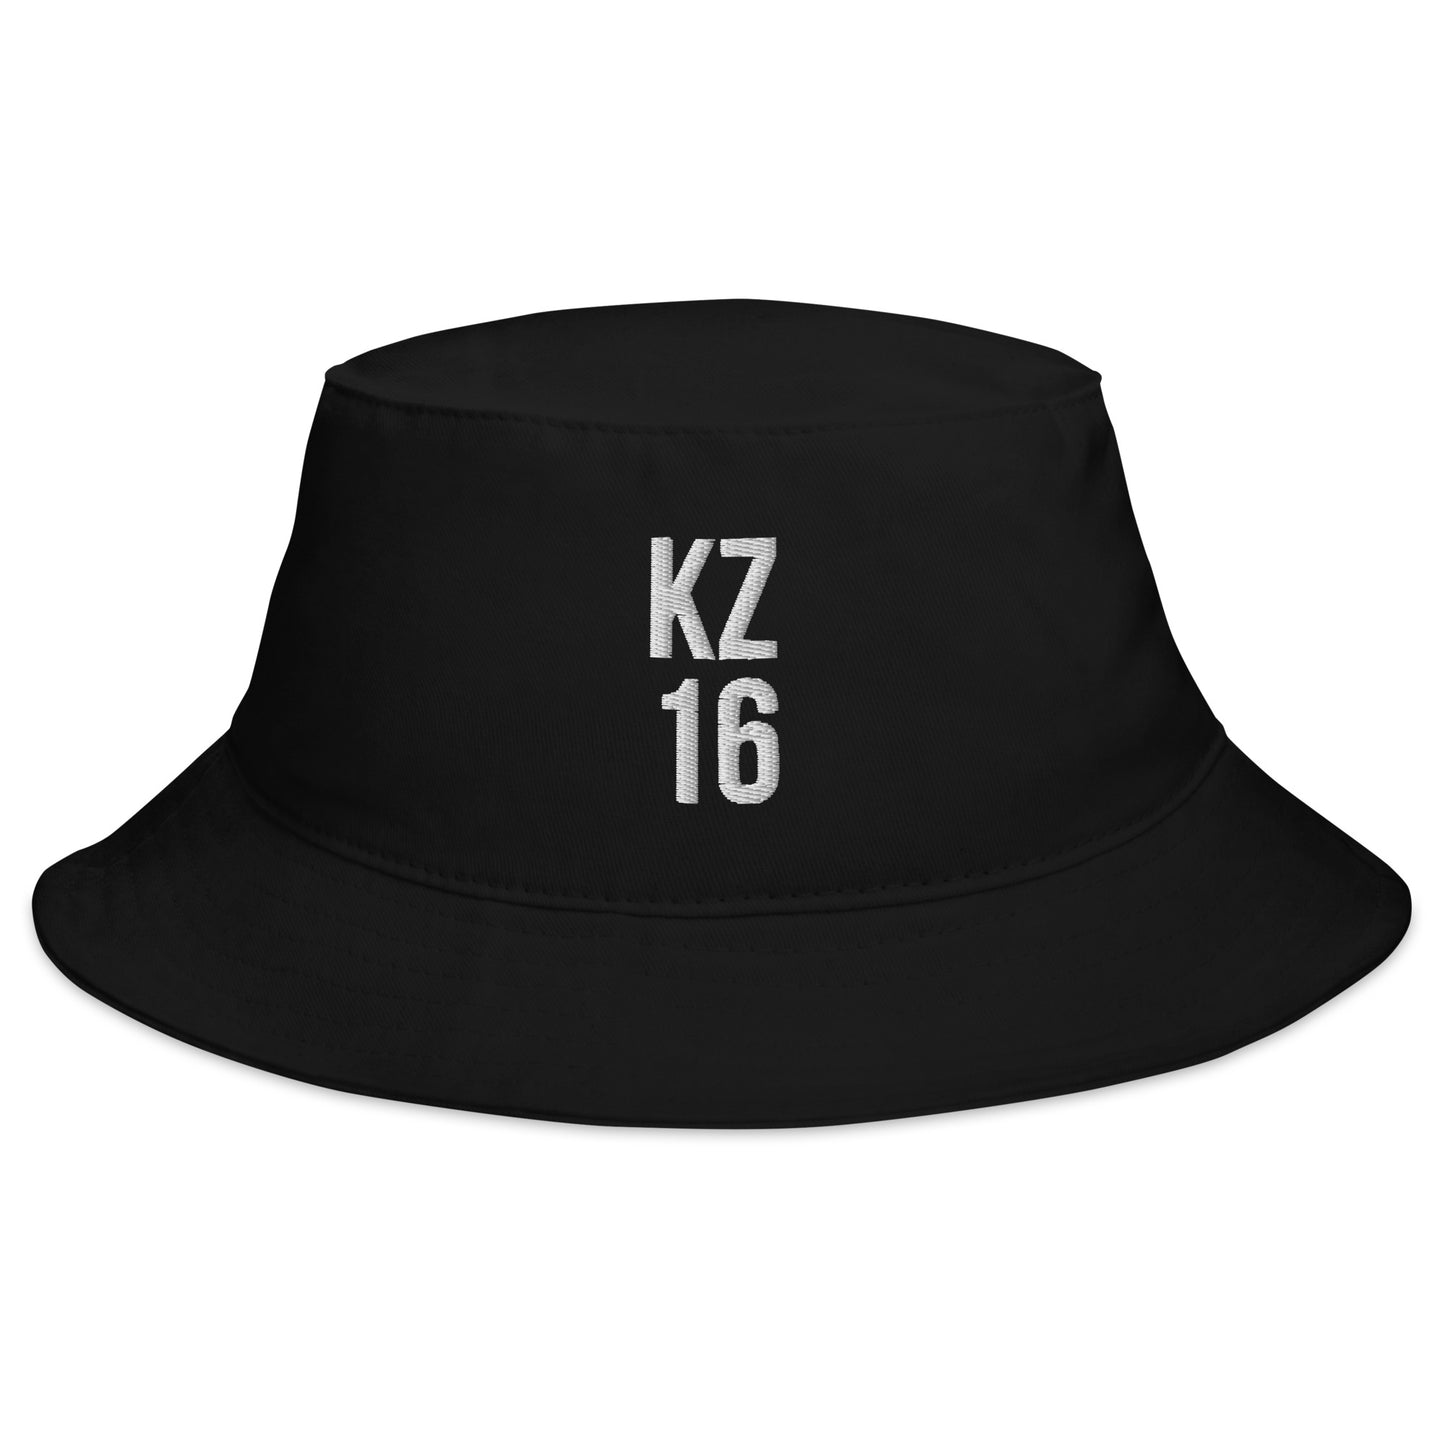 KZ 16 Bucket Hat